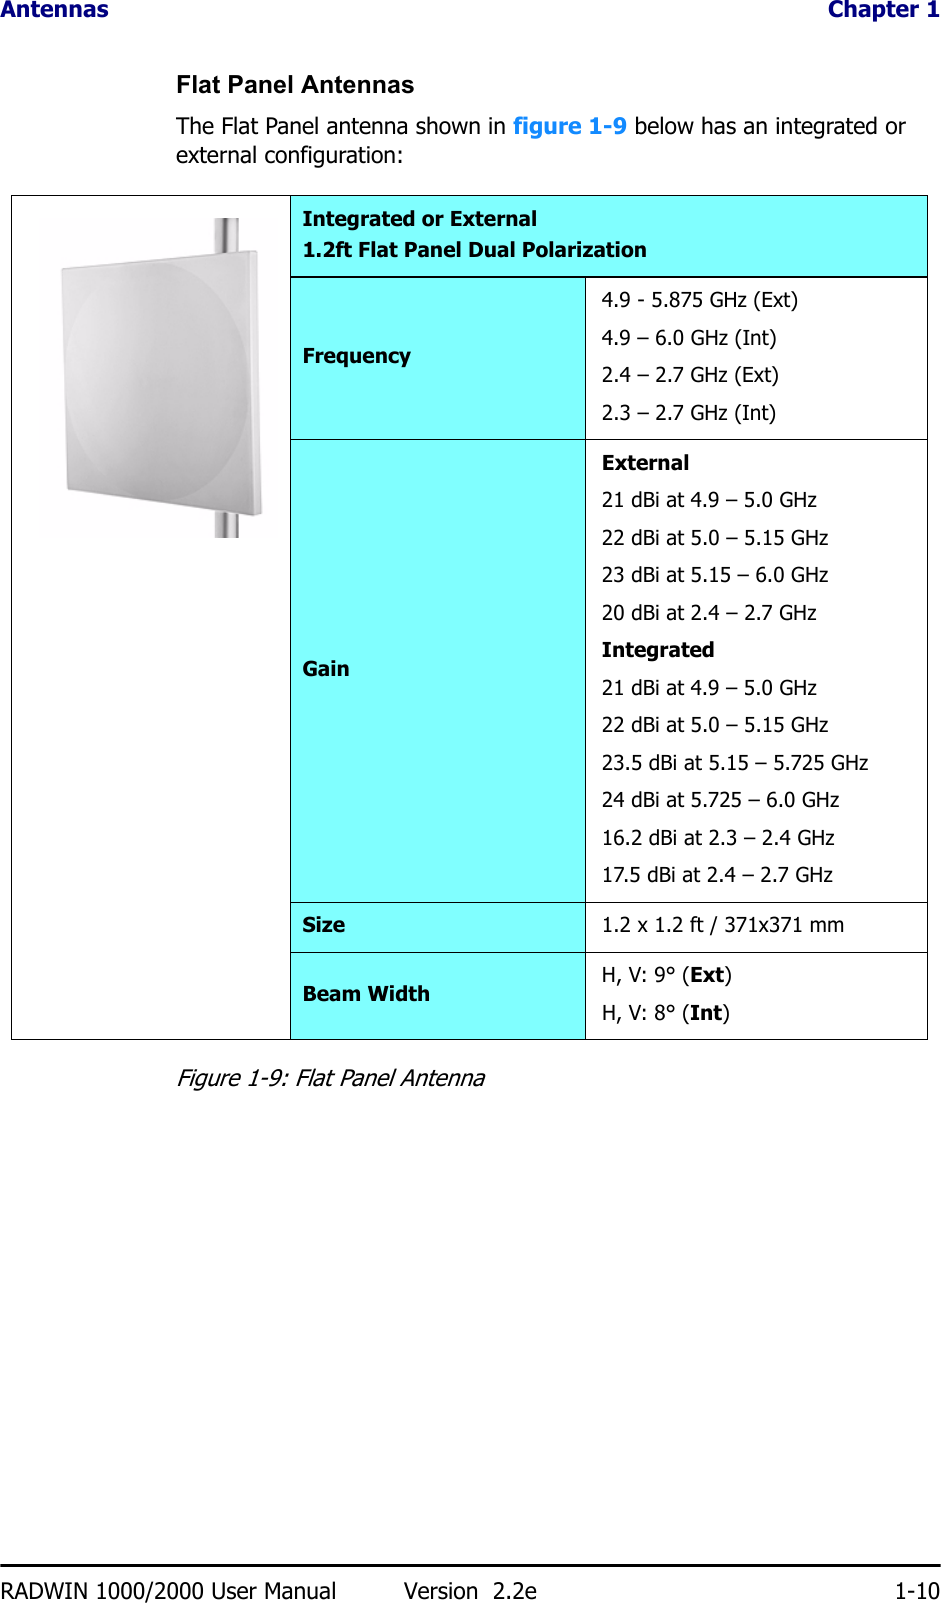 Antennas  Chapter 1RADWIN 1000/2000 User Manual Version  2.2e 1-10Flat Panel AntennasThe Flat Panel antenna shown in figure 1-9 below has an integrated or external configuration:Figure 1-9: Flat Panel AntennaIntegrated or External1.2ft Flat Panel Dual PolarizationFrequency4.9 - 5.875 GHz (Ext)4.9 – 6.0 GHz (Int)2.4 – 2.7 GHz (Ext)2.3 – 2.7 GHz (Int)GainExternal21 dBi at 4.9 – 5.0 GHz 22 dBi at 5.0 – 5.15 GHz 23 dBi at 5.15 – 6.0 GHz20 dBi at 2.4 – 2.7 GHzIntegrated21 dBi at 4.9 – 5.0 GHz 22 dBi at 5.0 – 5.15 GHz 23.5 dBi at 5.15 – 5.725 GHz24 dBi at 5.725 – 6.0 GHz16.2 dBi at 2.3 – 2.4 GHz17.5 dBi at 2.4 – 2.7 GHzSize 1.2 x 1.2 ft / 371x371 mmBeam Width H, V: 9° (Ext)H, V: 8° (Int)